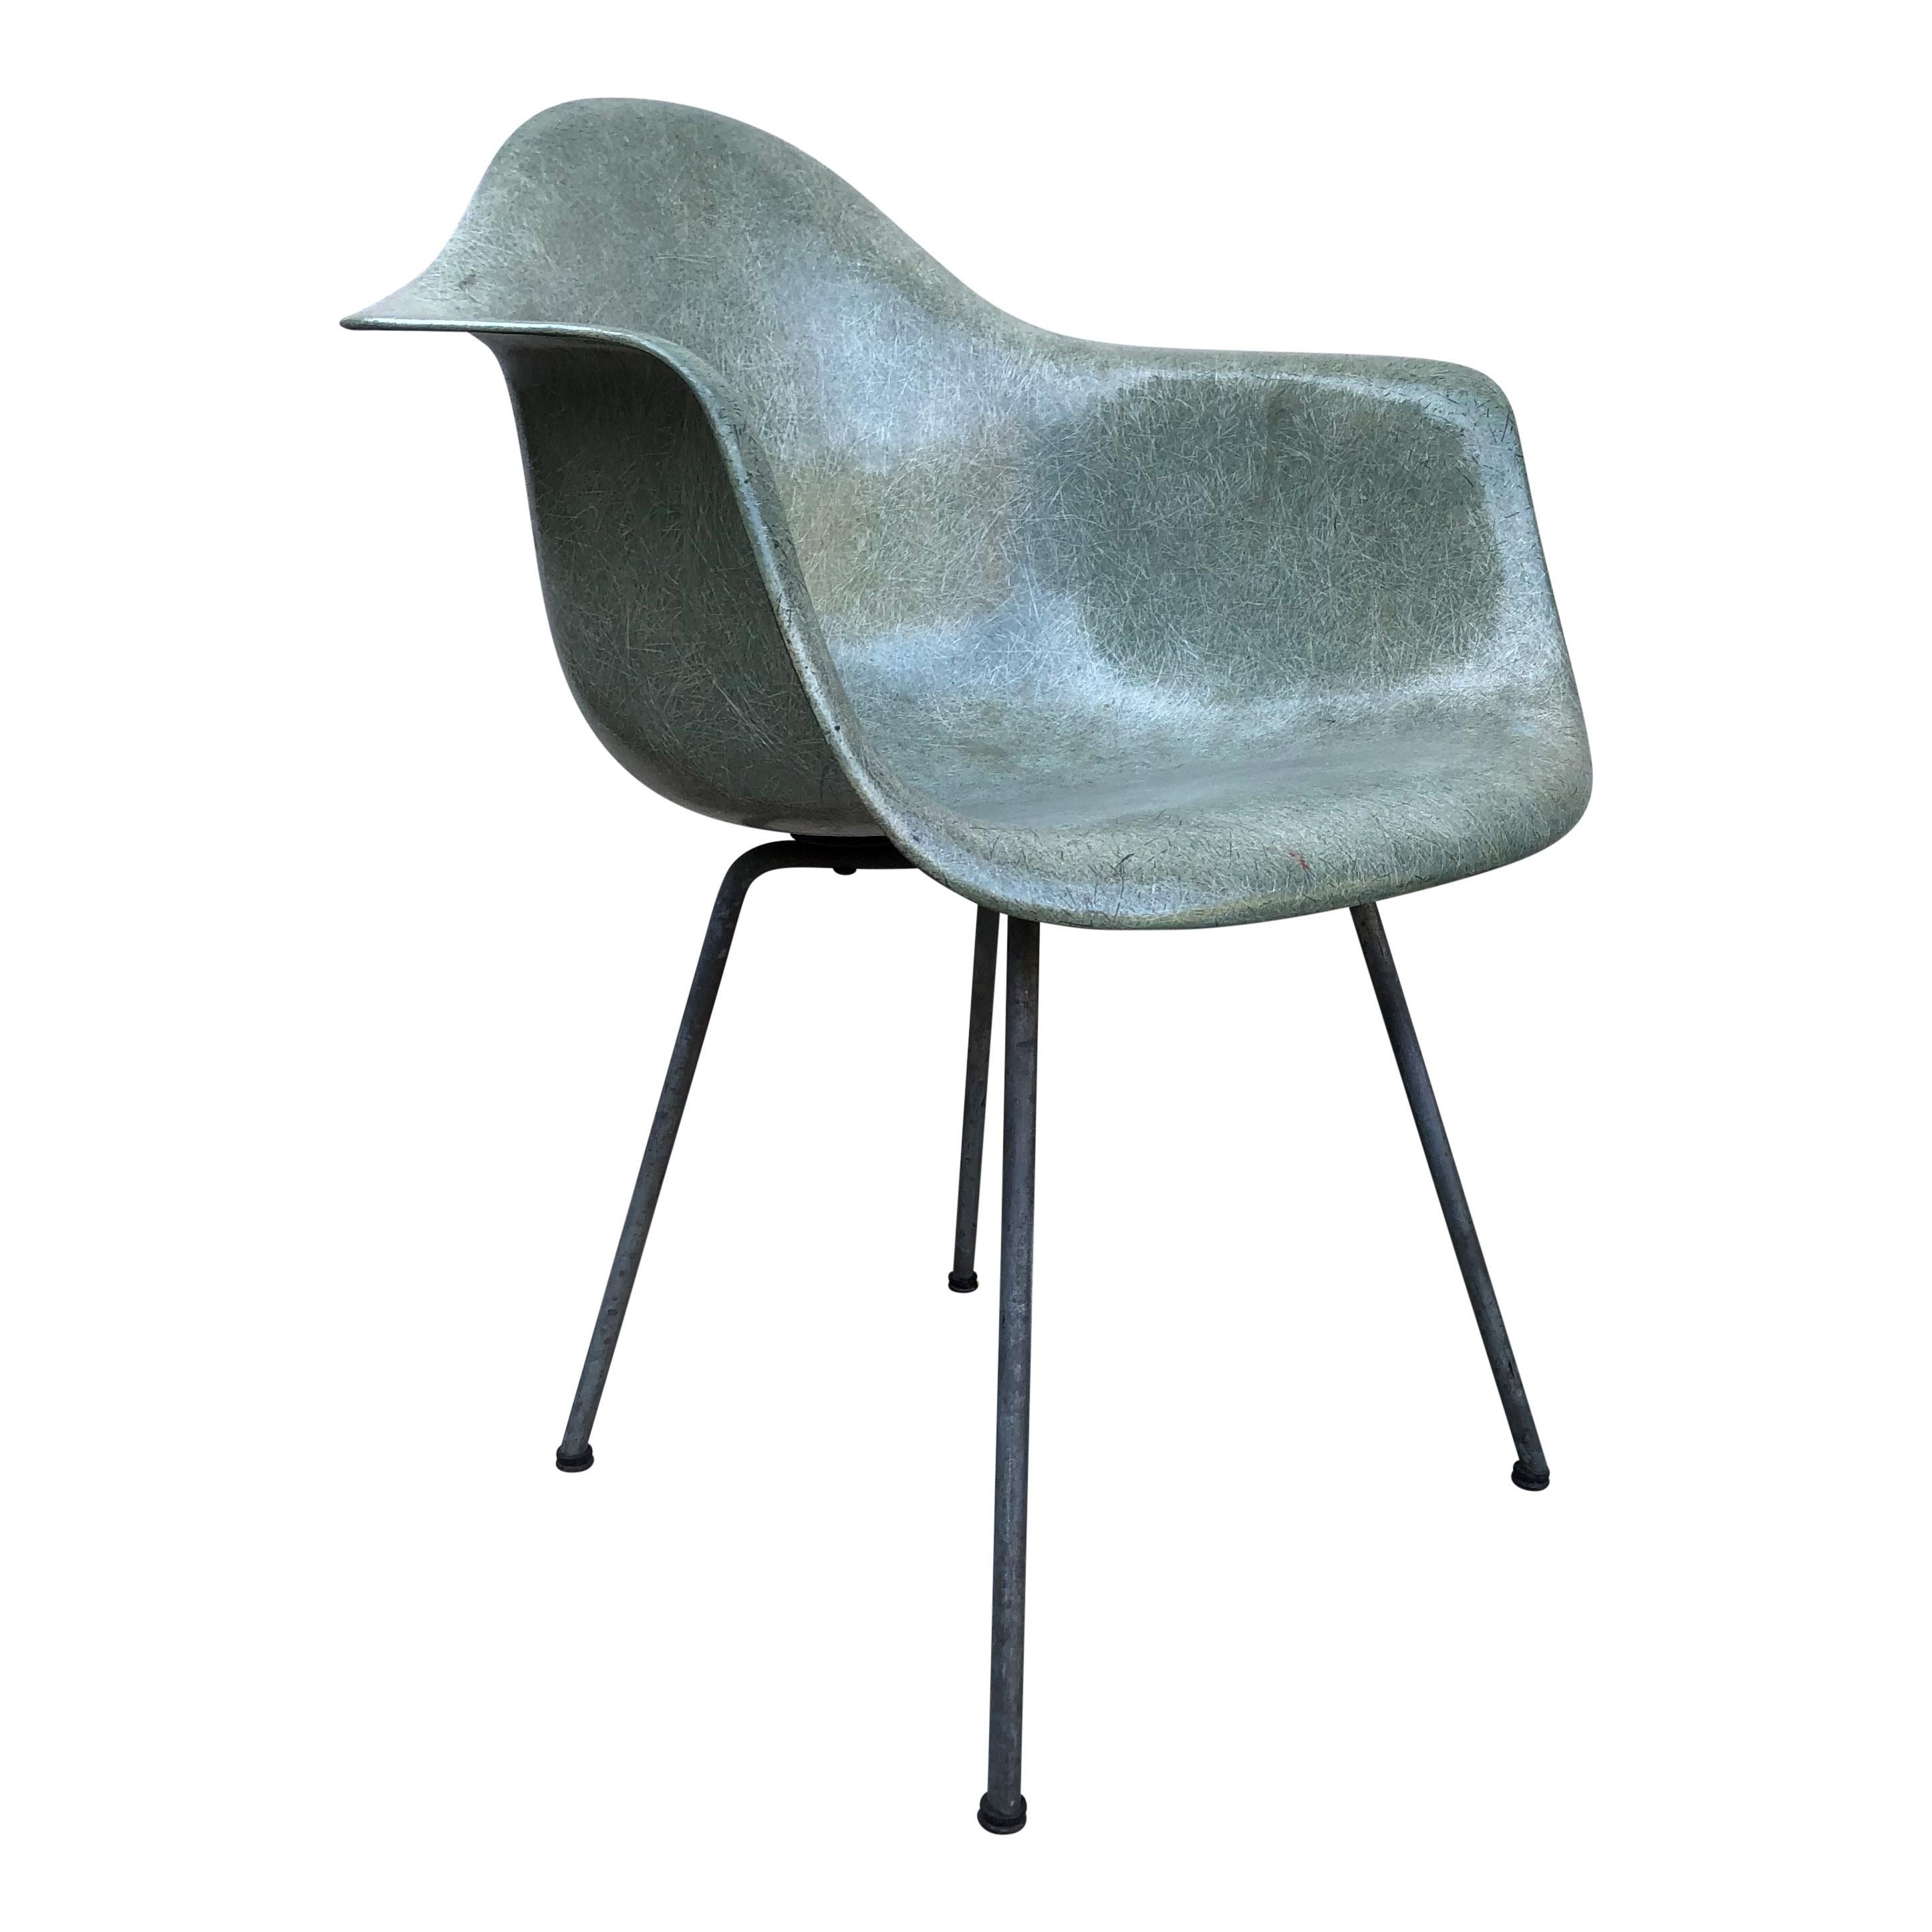 6 Eames Herman Miller Seafoam Green Zenith DAX Chair, Midcentury Collectible